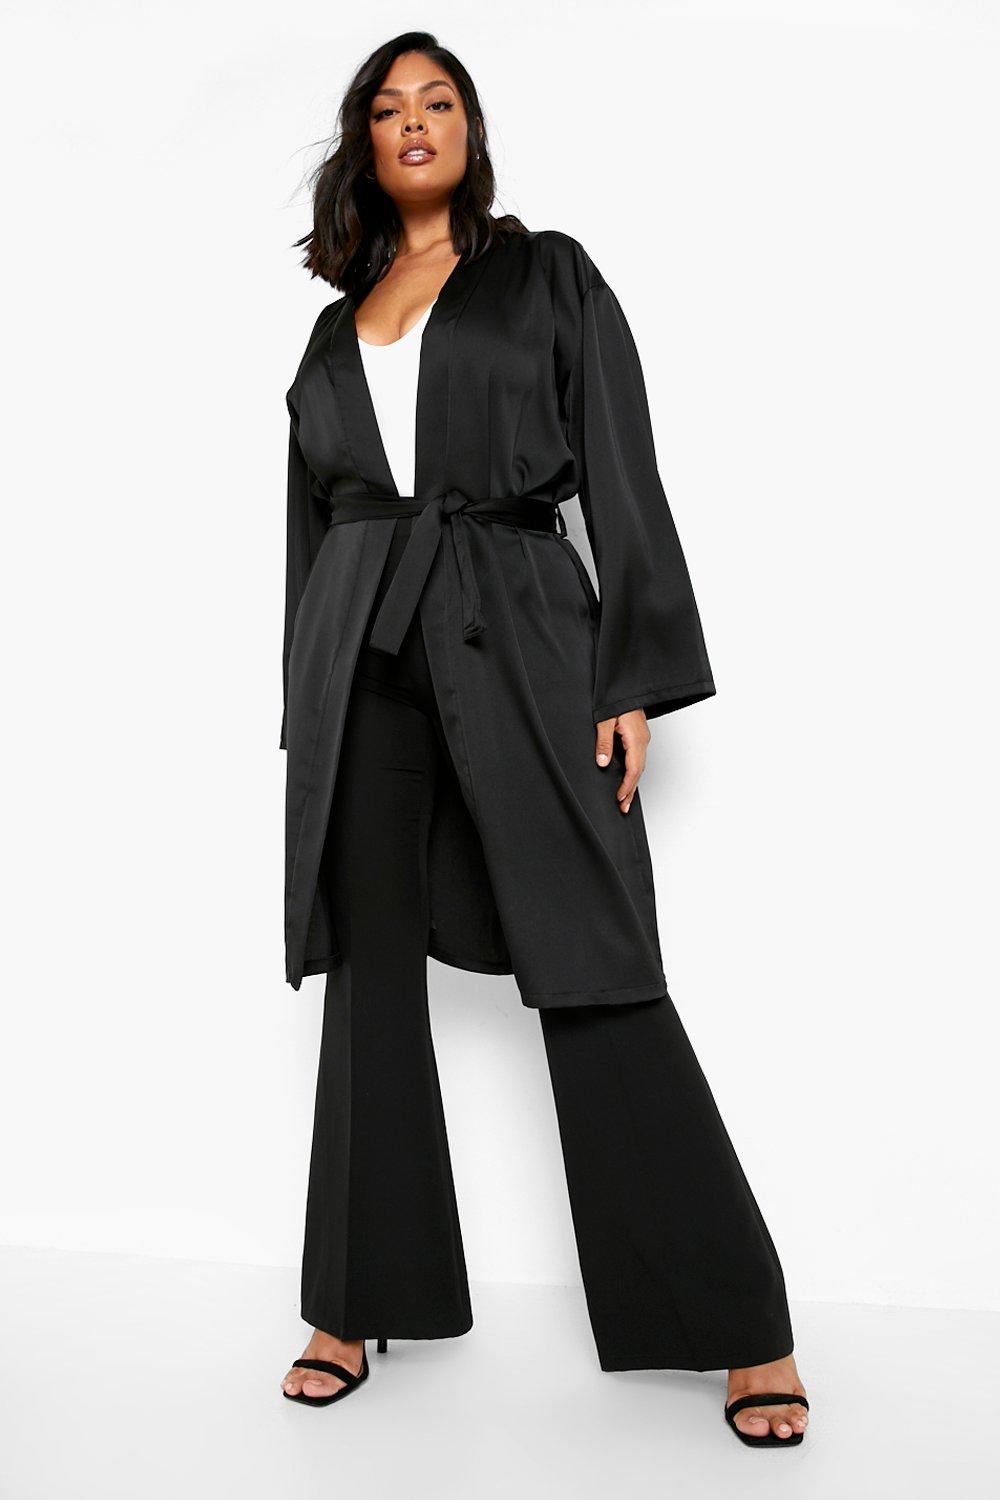 Size 24 BNWT Boohoo Plus Crepe Kimono Sleeve Duster Jacket in Black